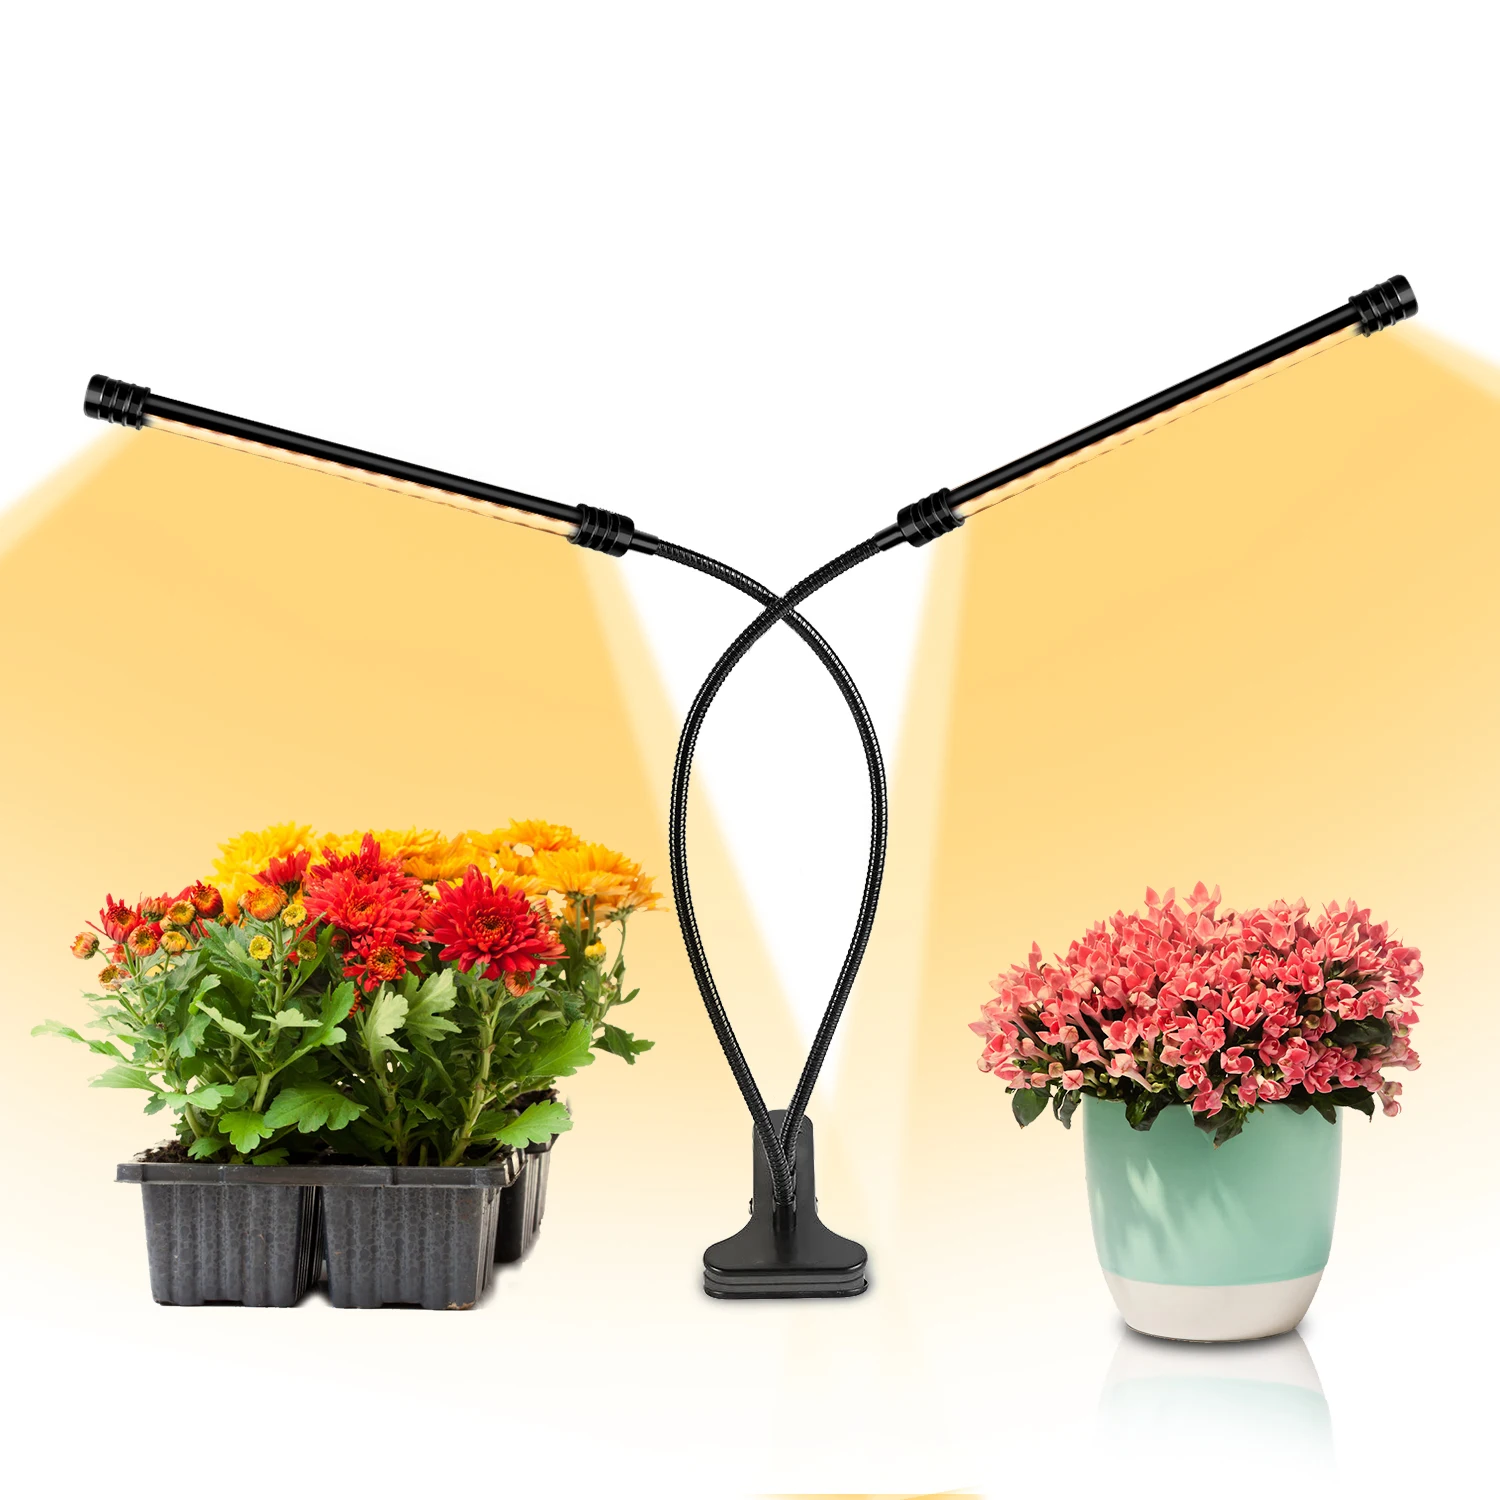 

LED Grow Light 15W 30W 45W 60W DC 5V Phyto Lamp Full Spectrum Phytolamp for Plants Indoor Flower Seeds Led Bulb IP65 Waterproof